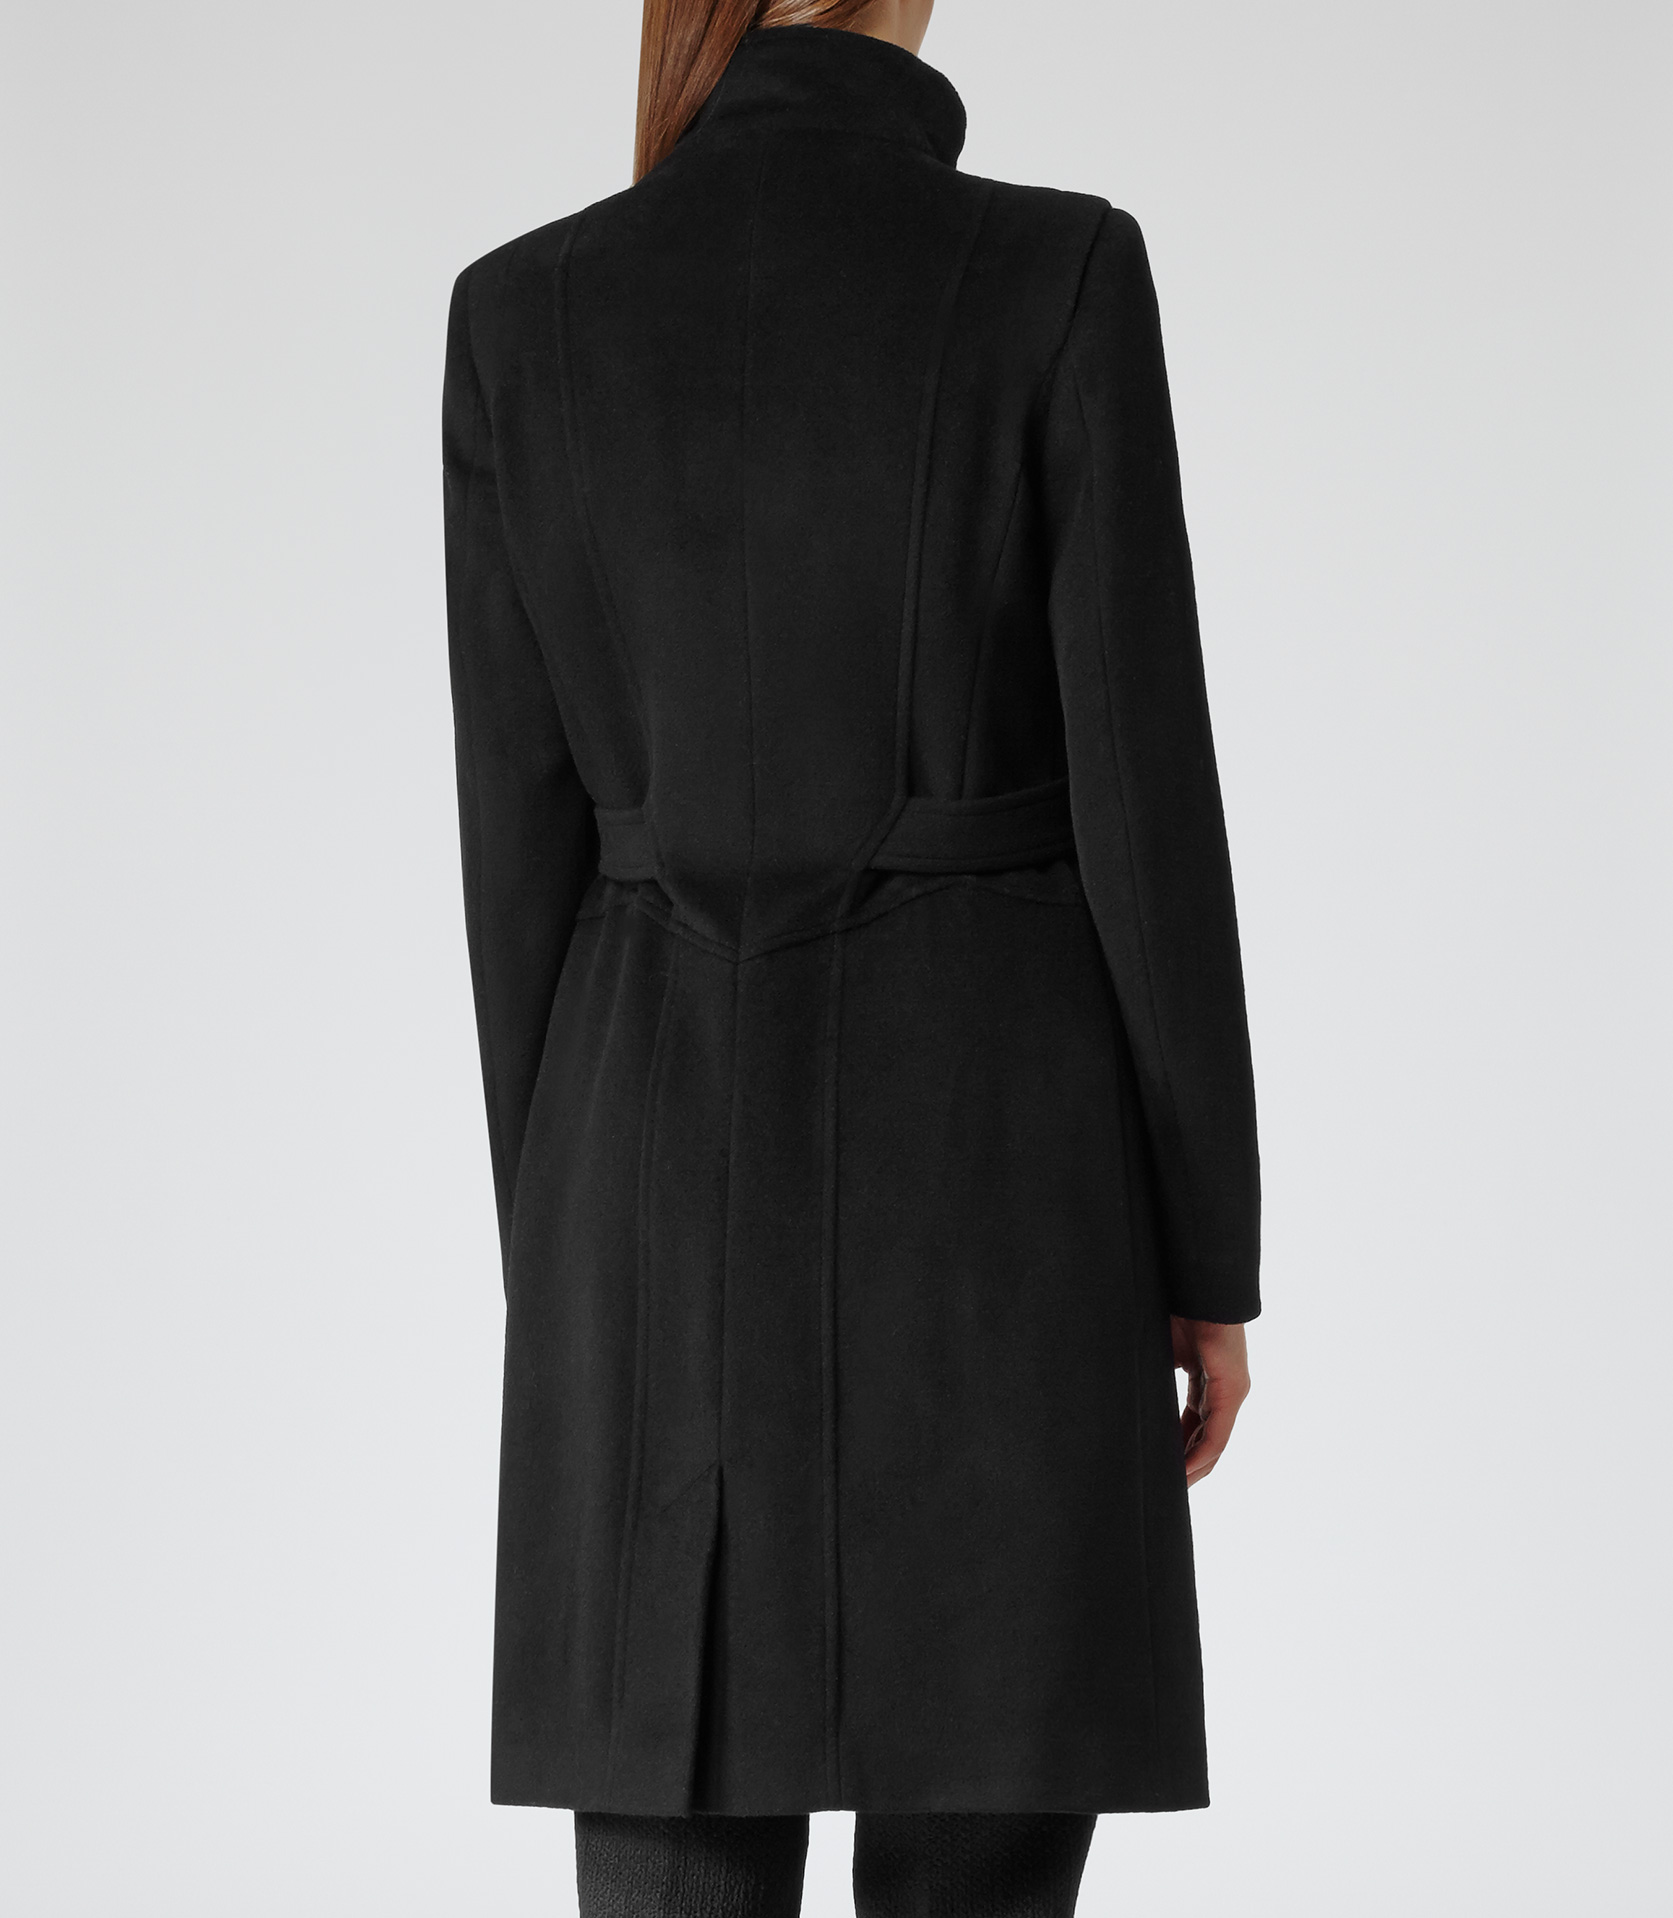 Reiss Evia Longline Belted Coat in Black - Lyst